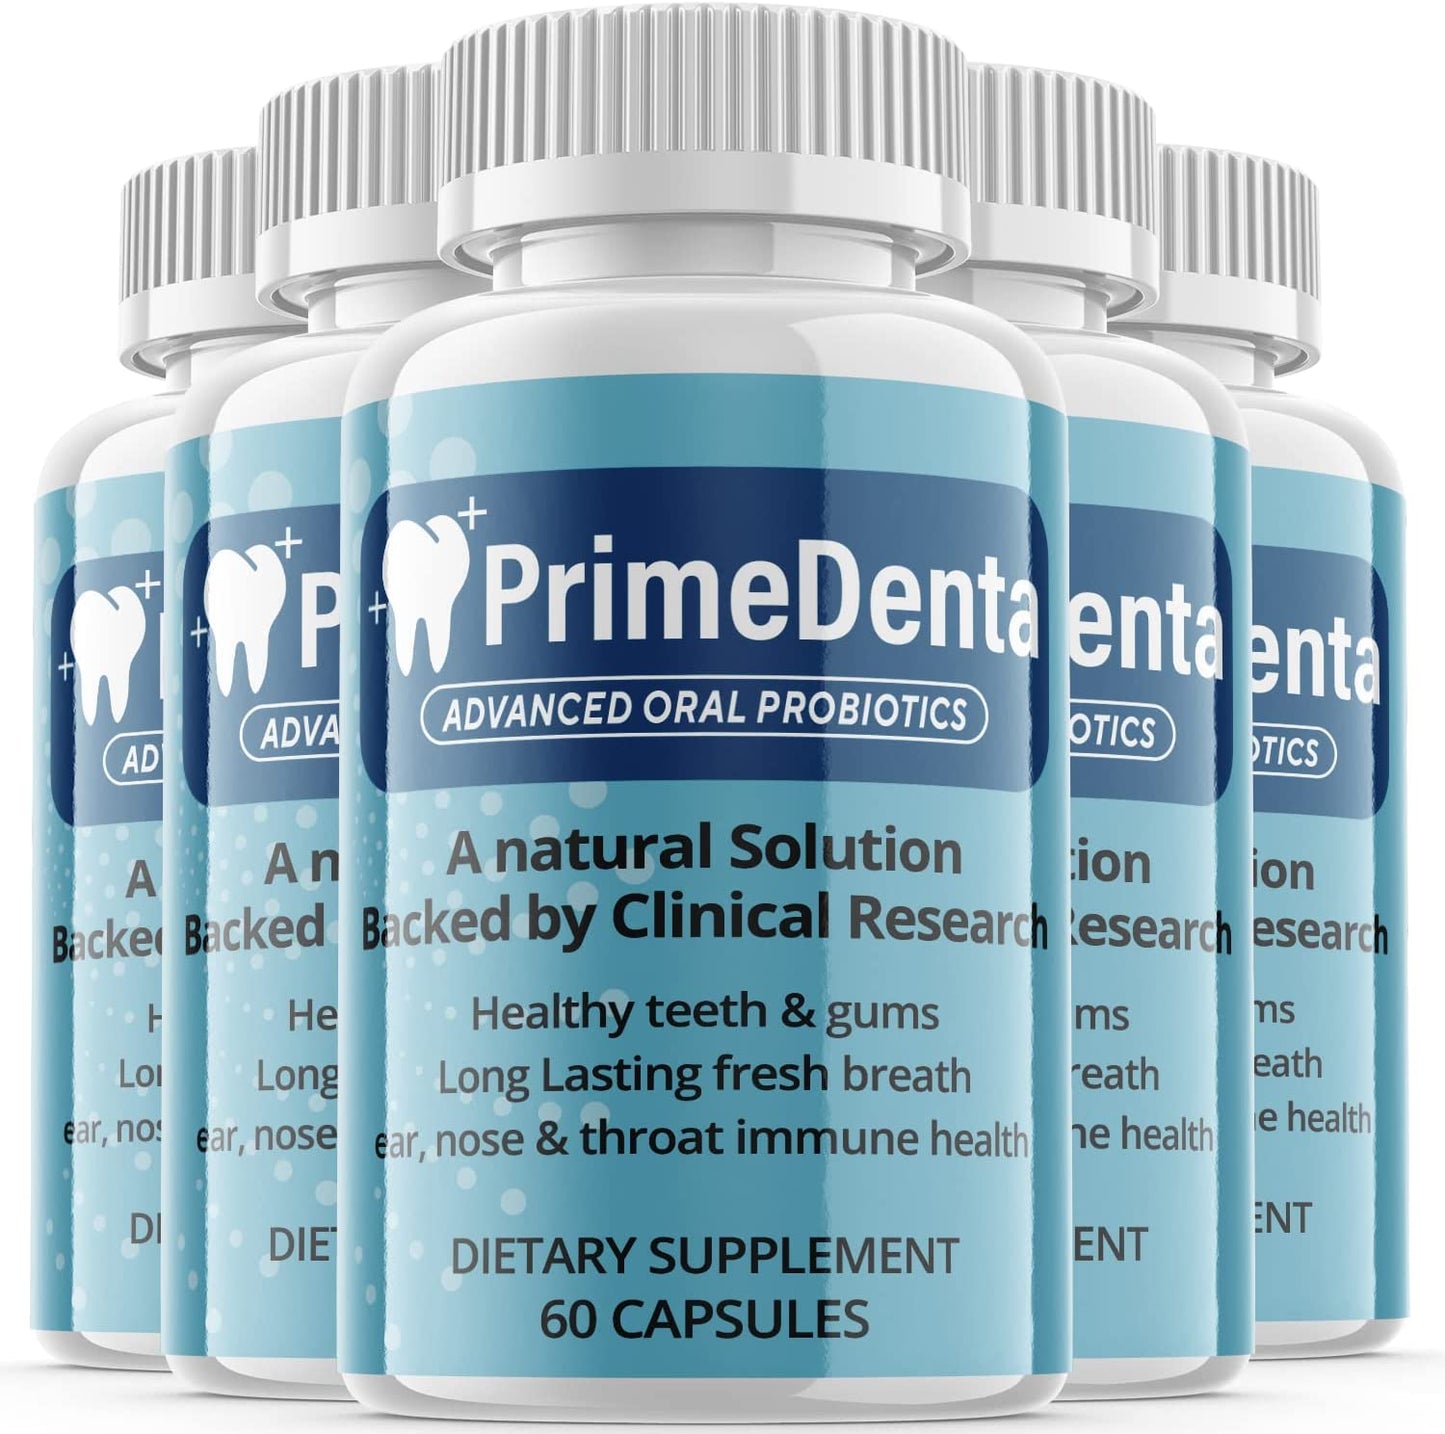 Prime Denta Oral Probiotic Pills